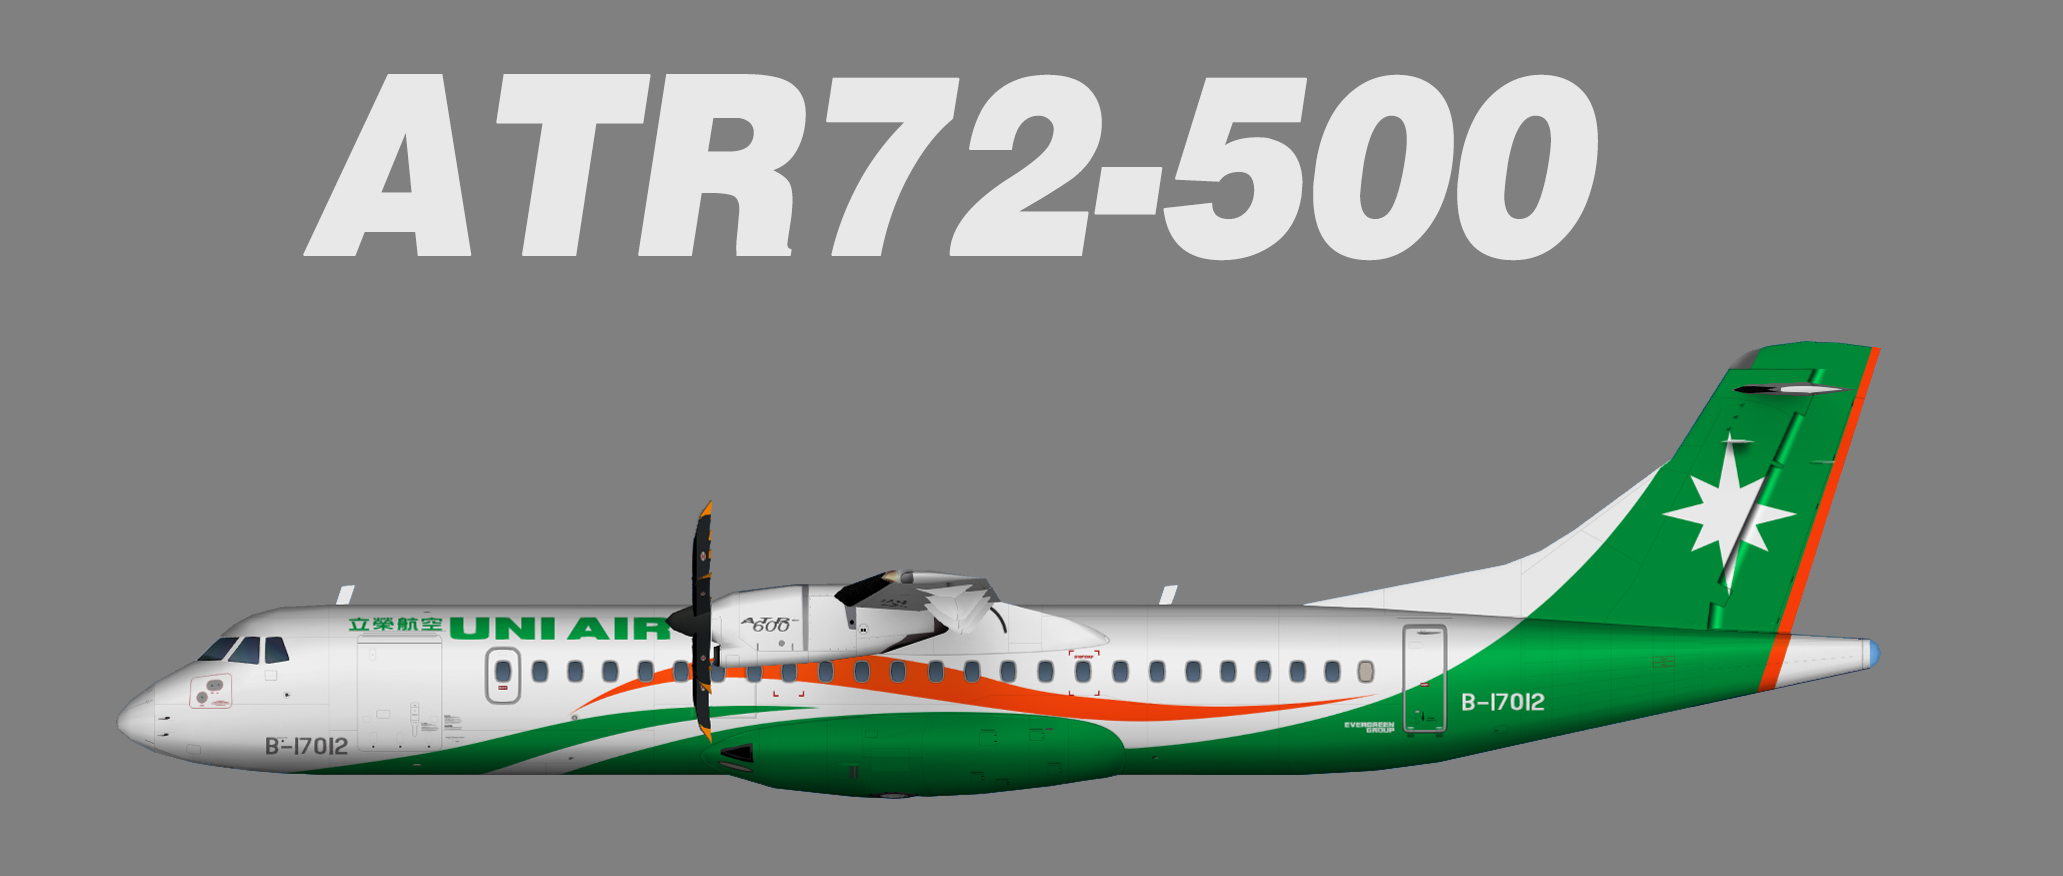 UNI Air ATR72-600